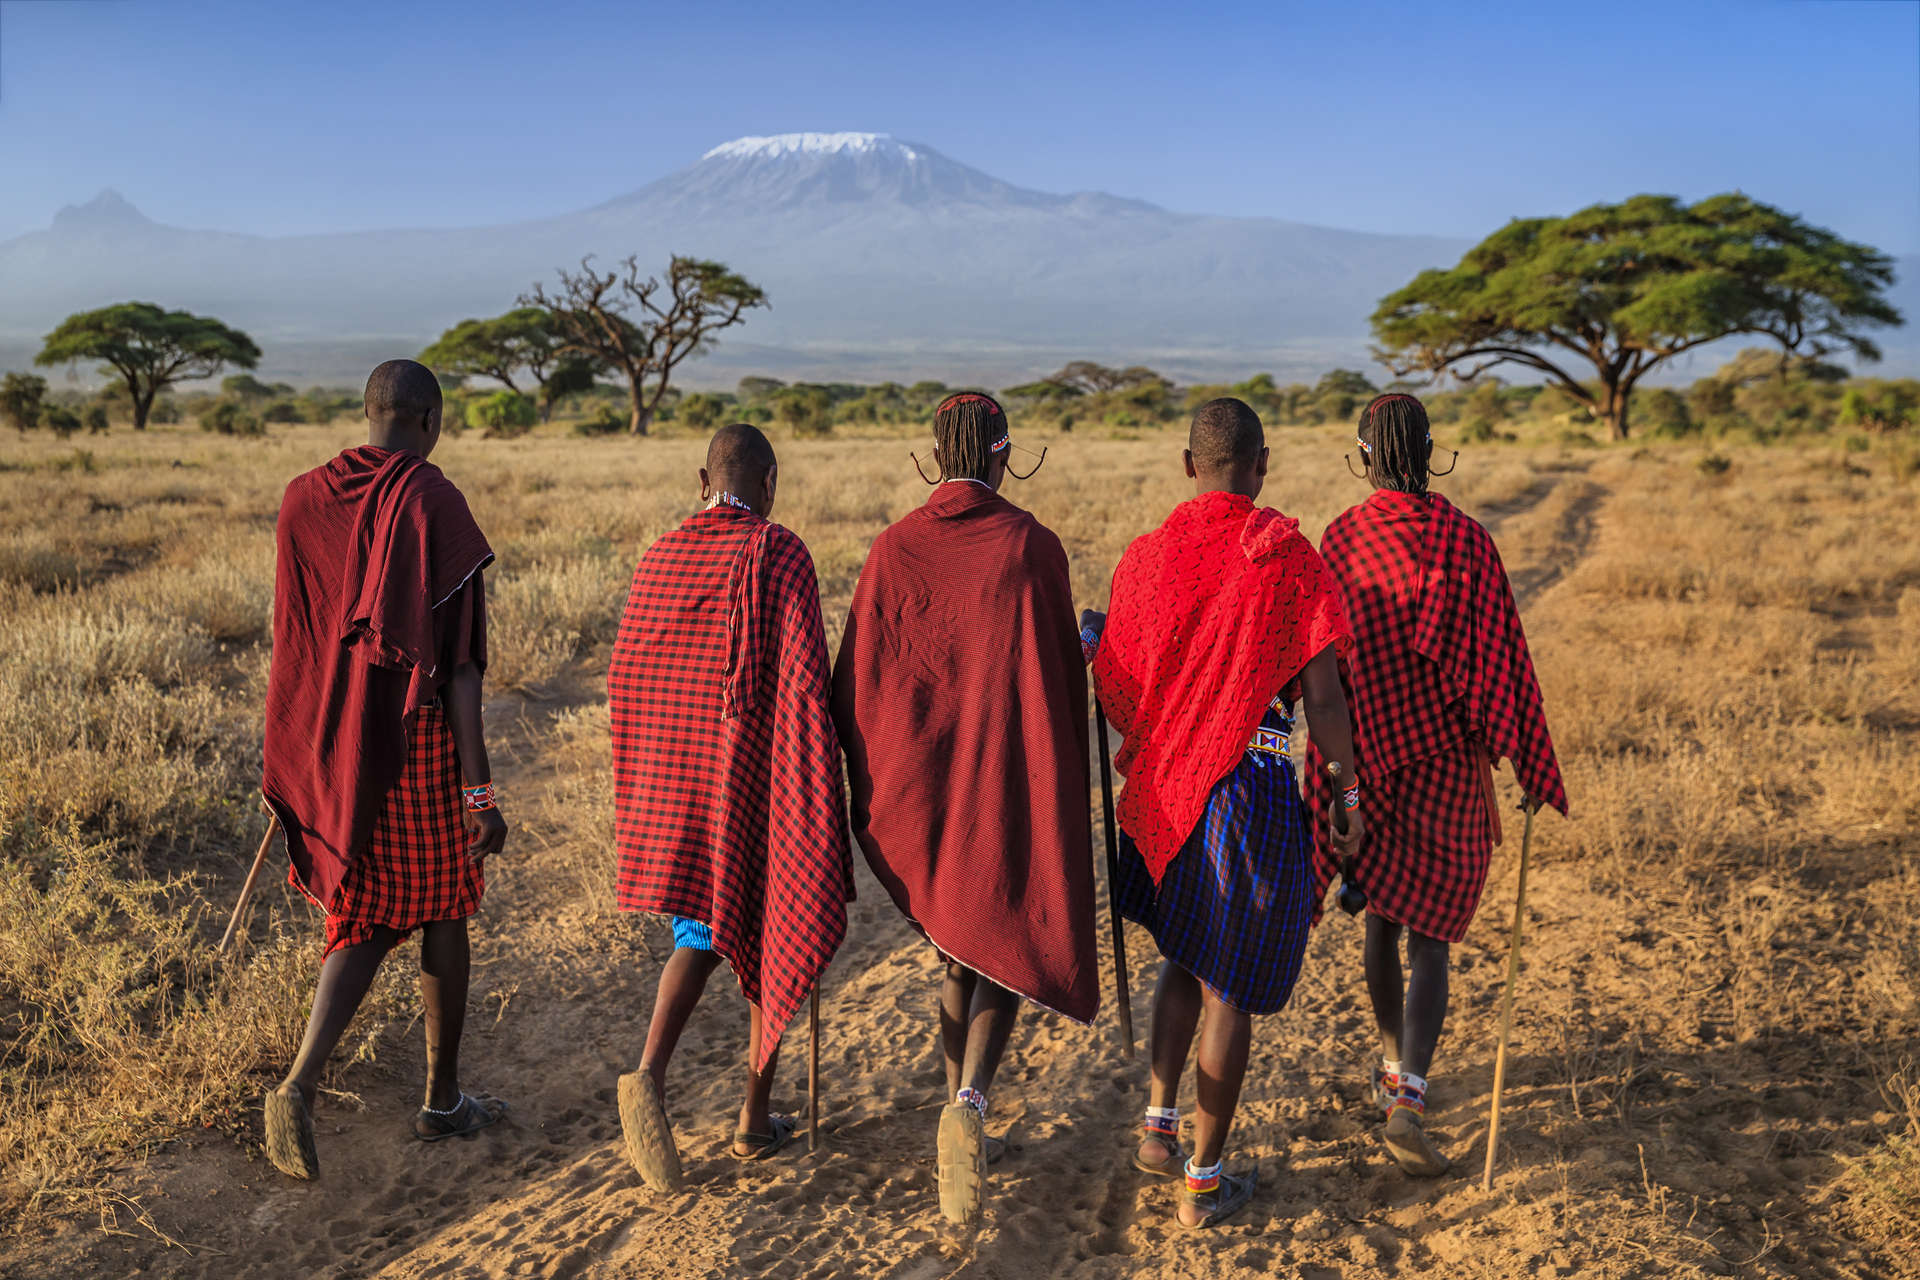 Maasai people in the Maasai Mara National Reserve